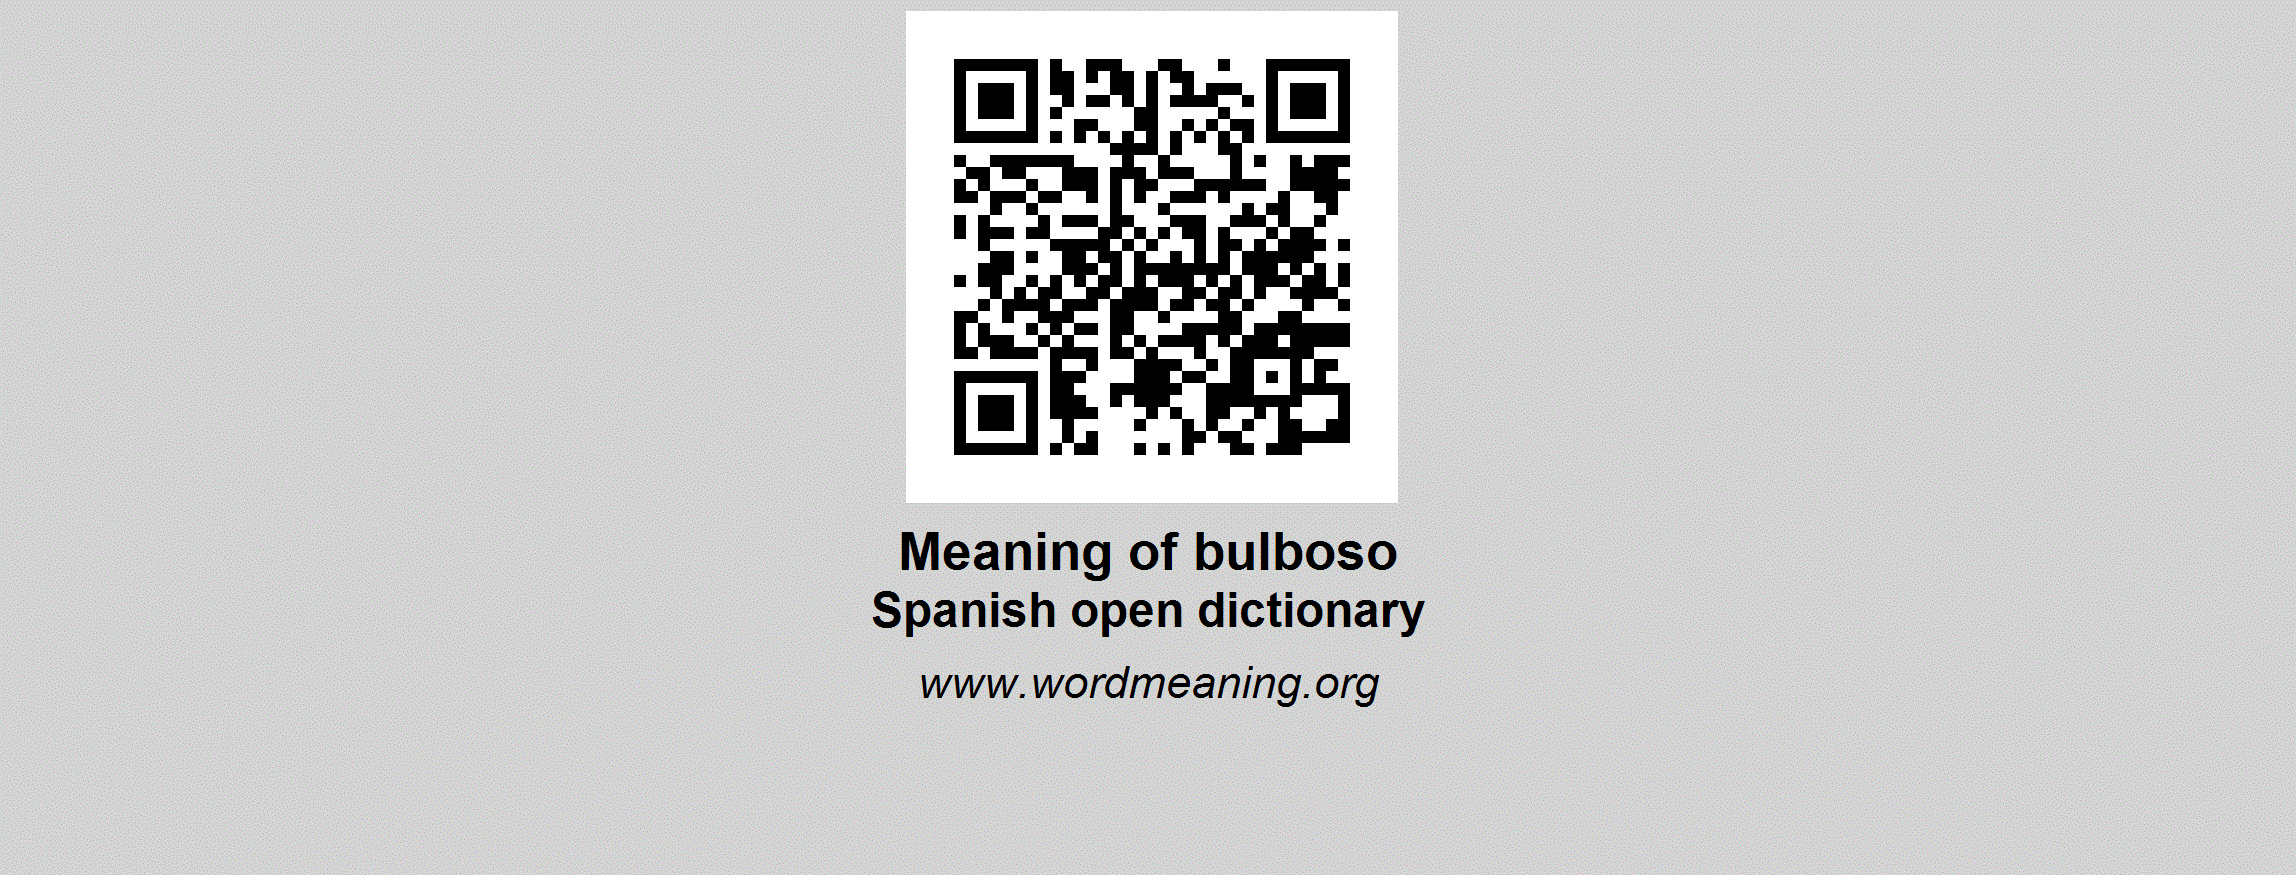 Empresa compañerismo filtrar BULBOSO - Spanish open dictionary